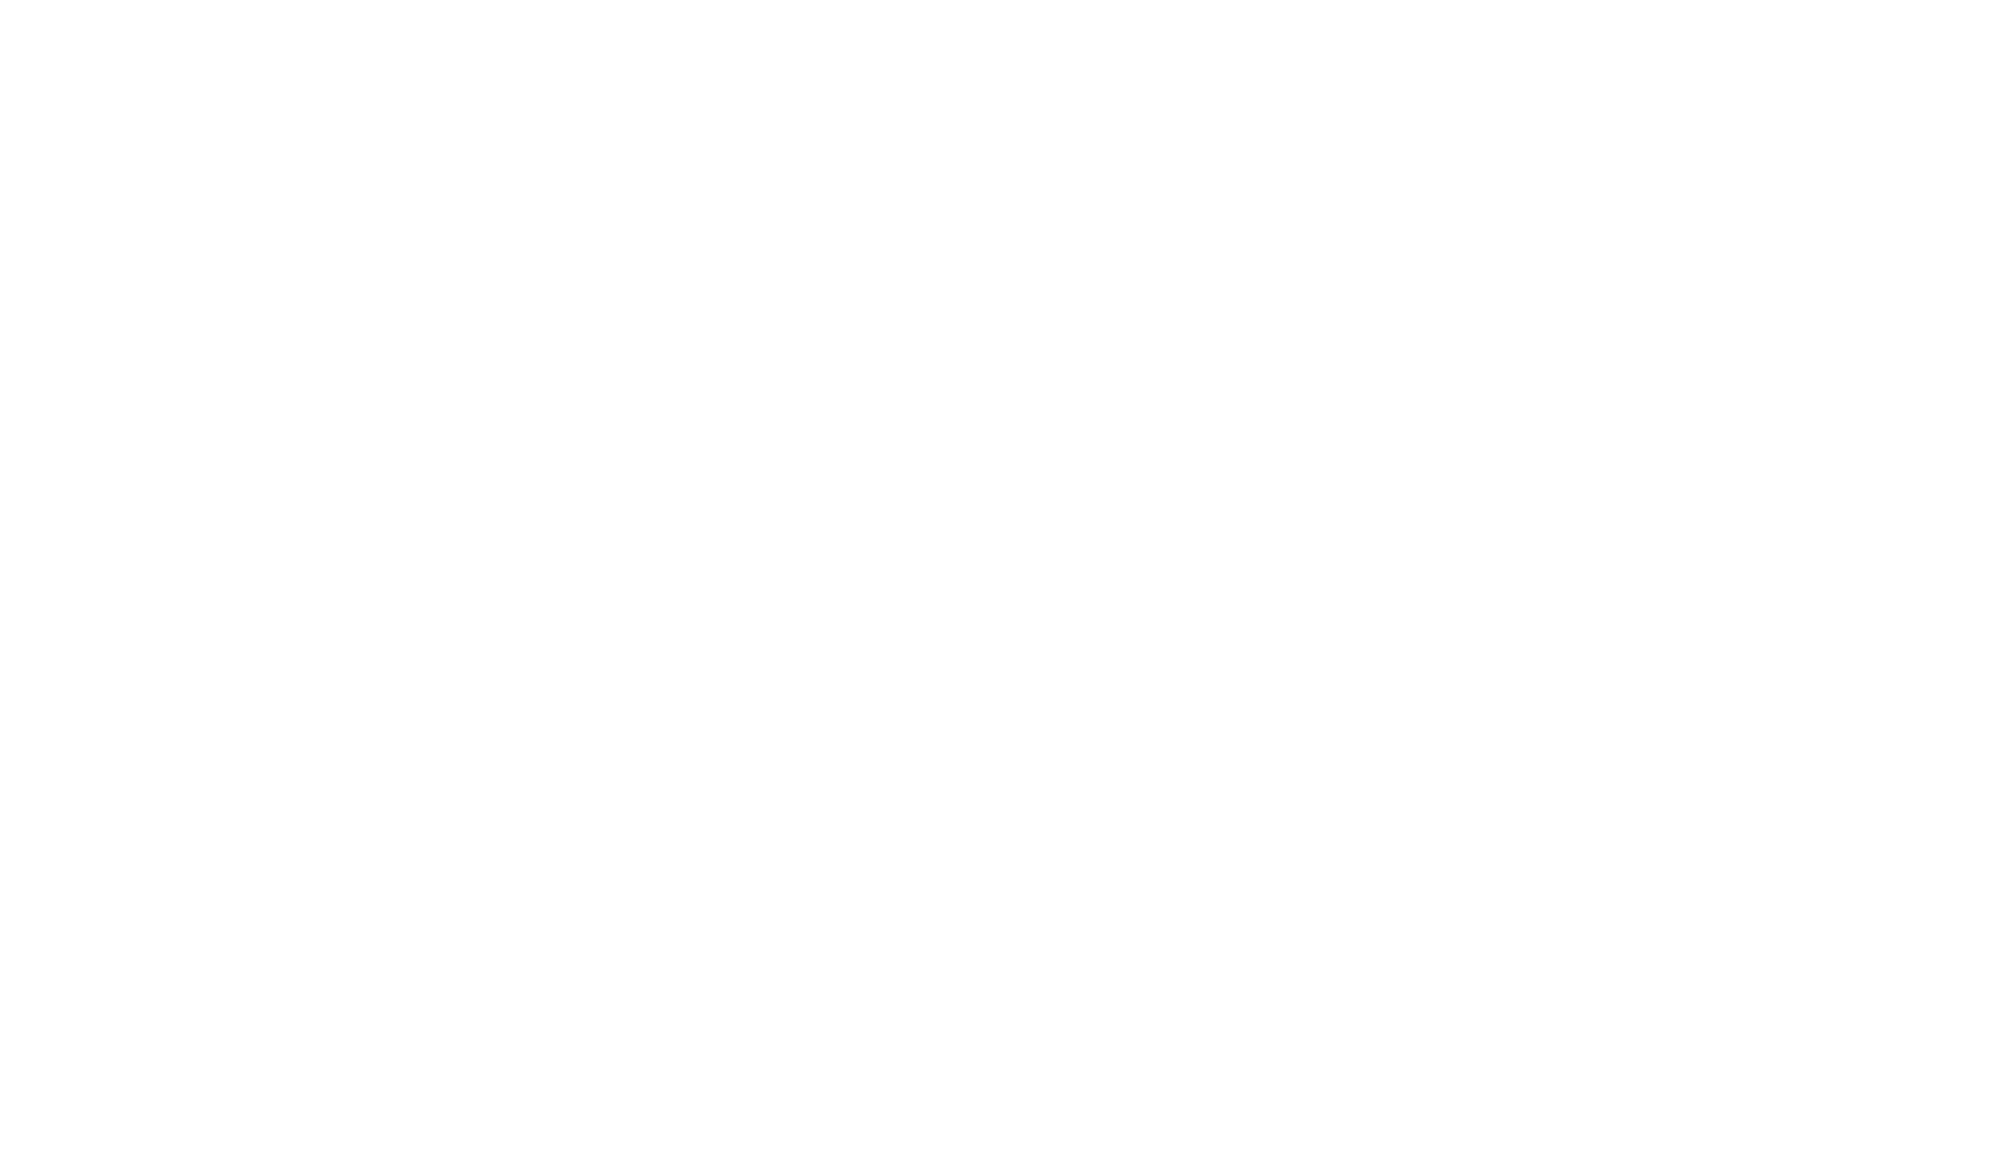 The Playful Mind 2023 AUTUMN&WINTER outer STYLINGS MEETS Rinka Kumada